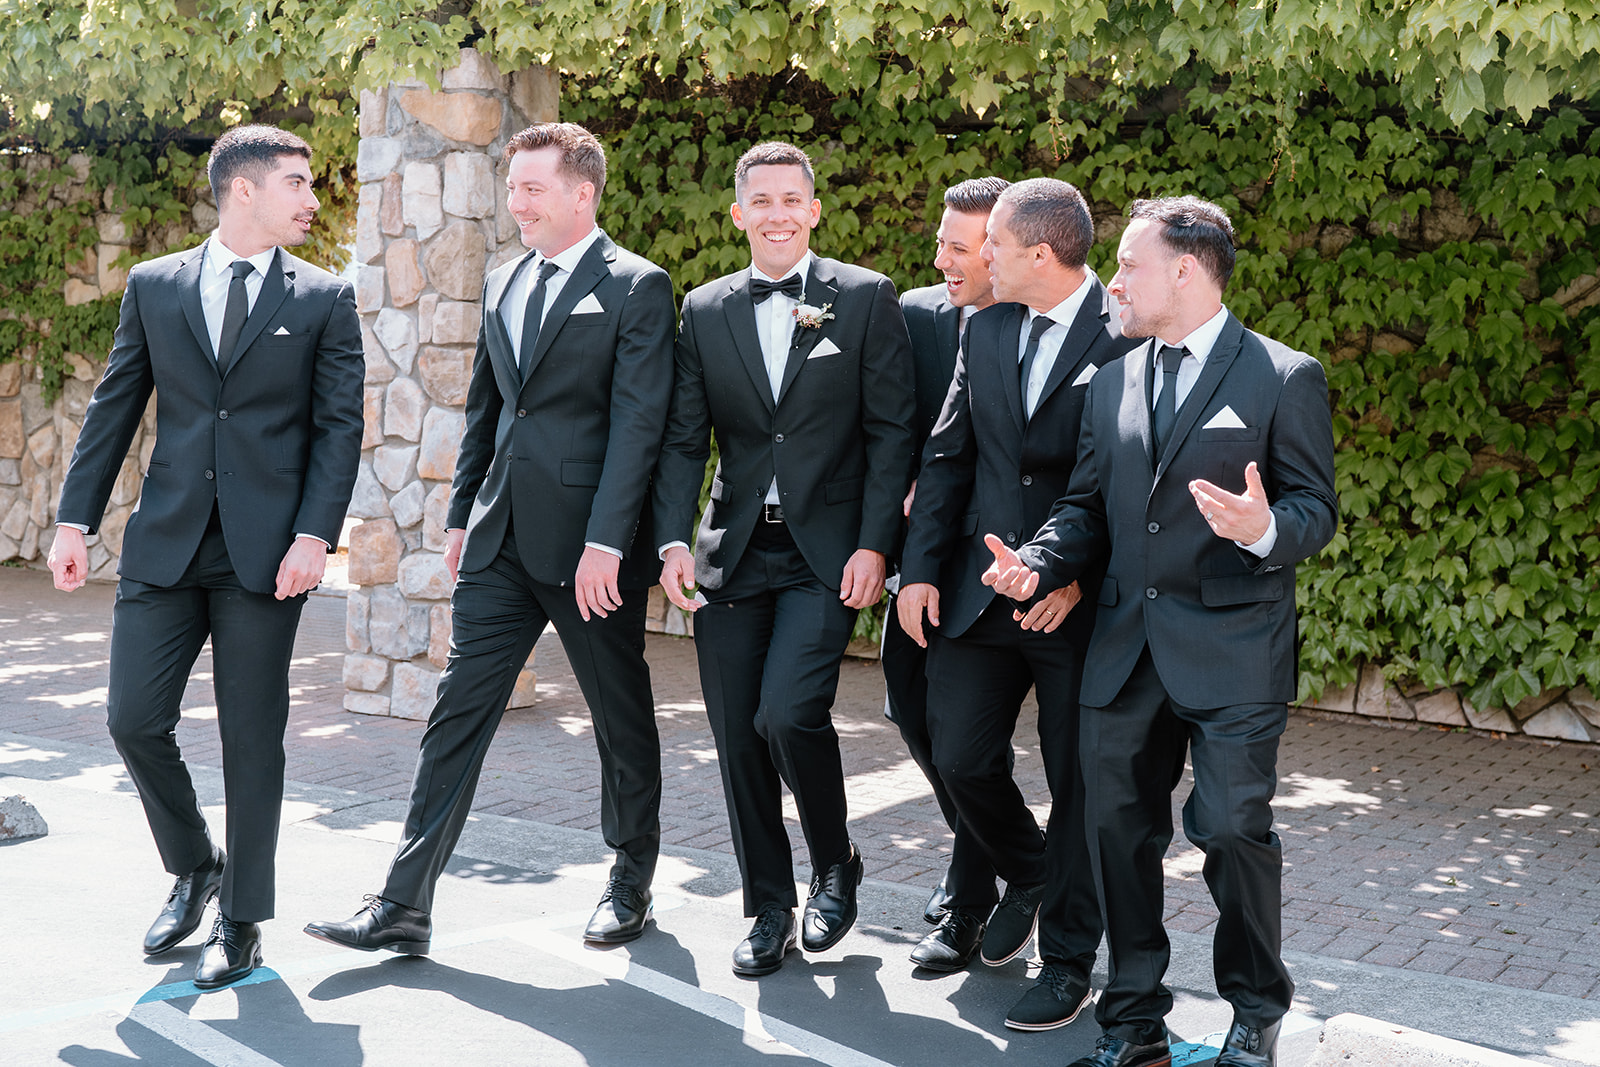 Sydney Jai Photography - Northern California wedding photographer, groom and groomsmen